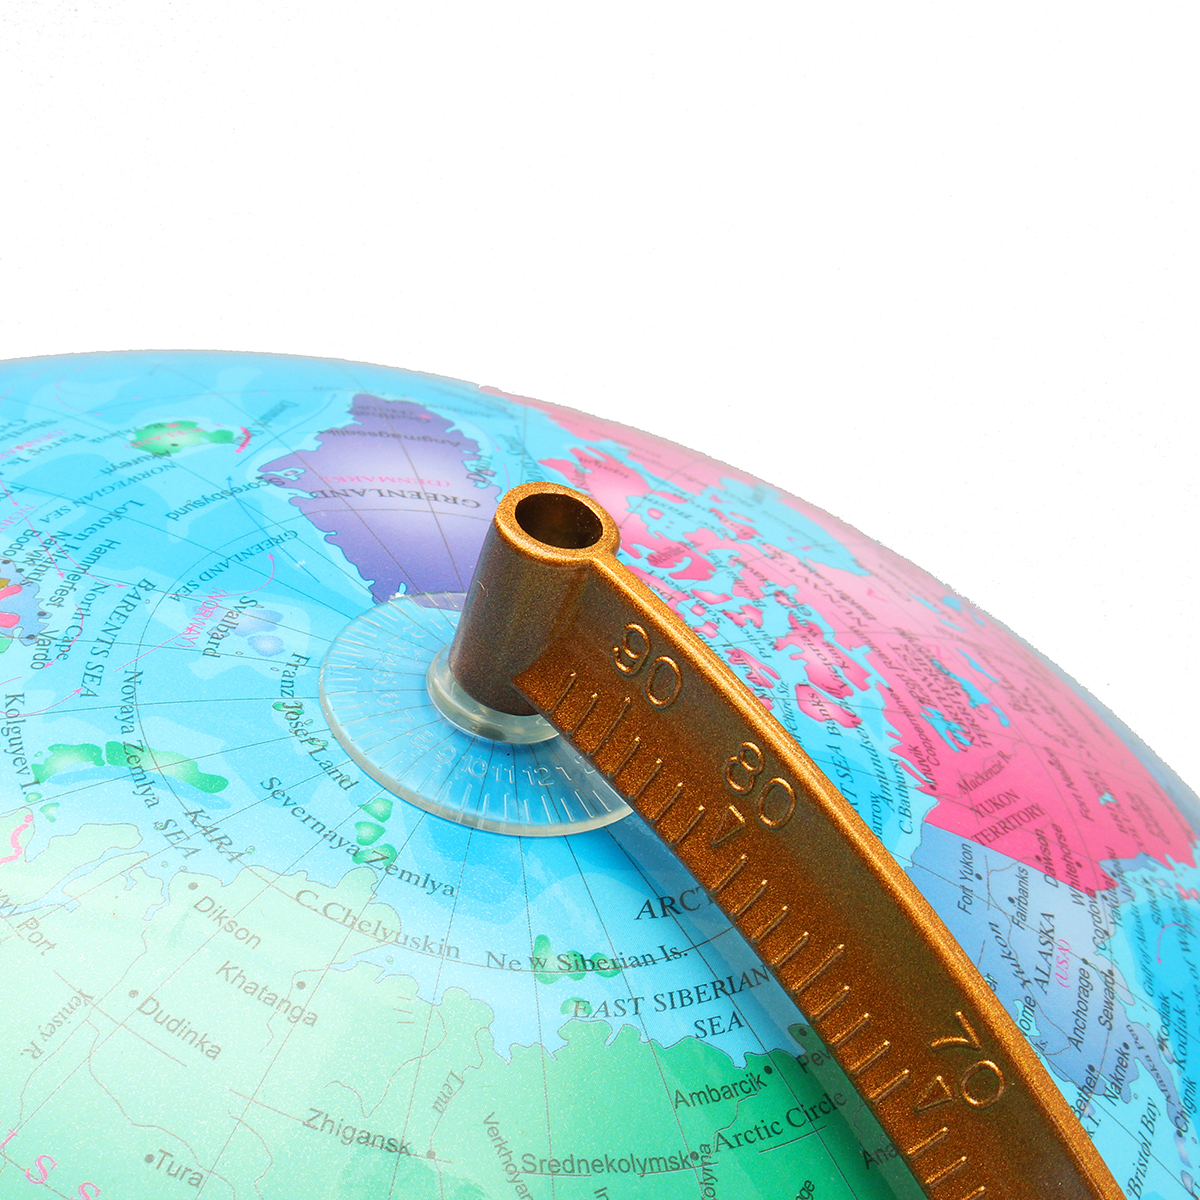 125quot-World-Earth-Globe-Map-Geography-LED-Illuminated-for-Desktop-Decoration-Education-Kids-Gift-1252283-2